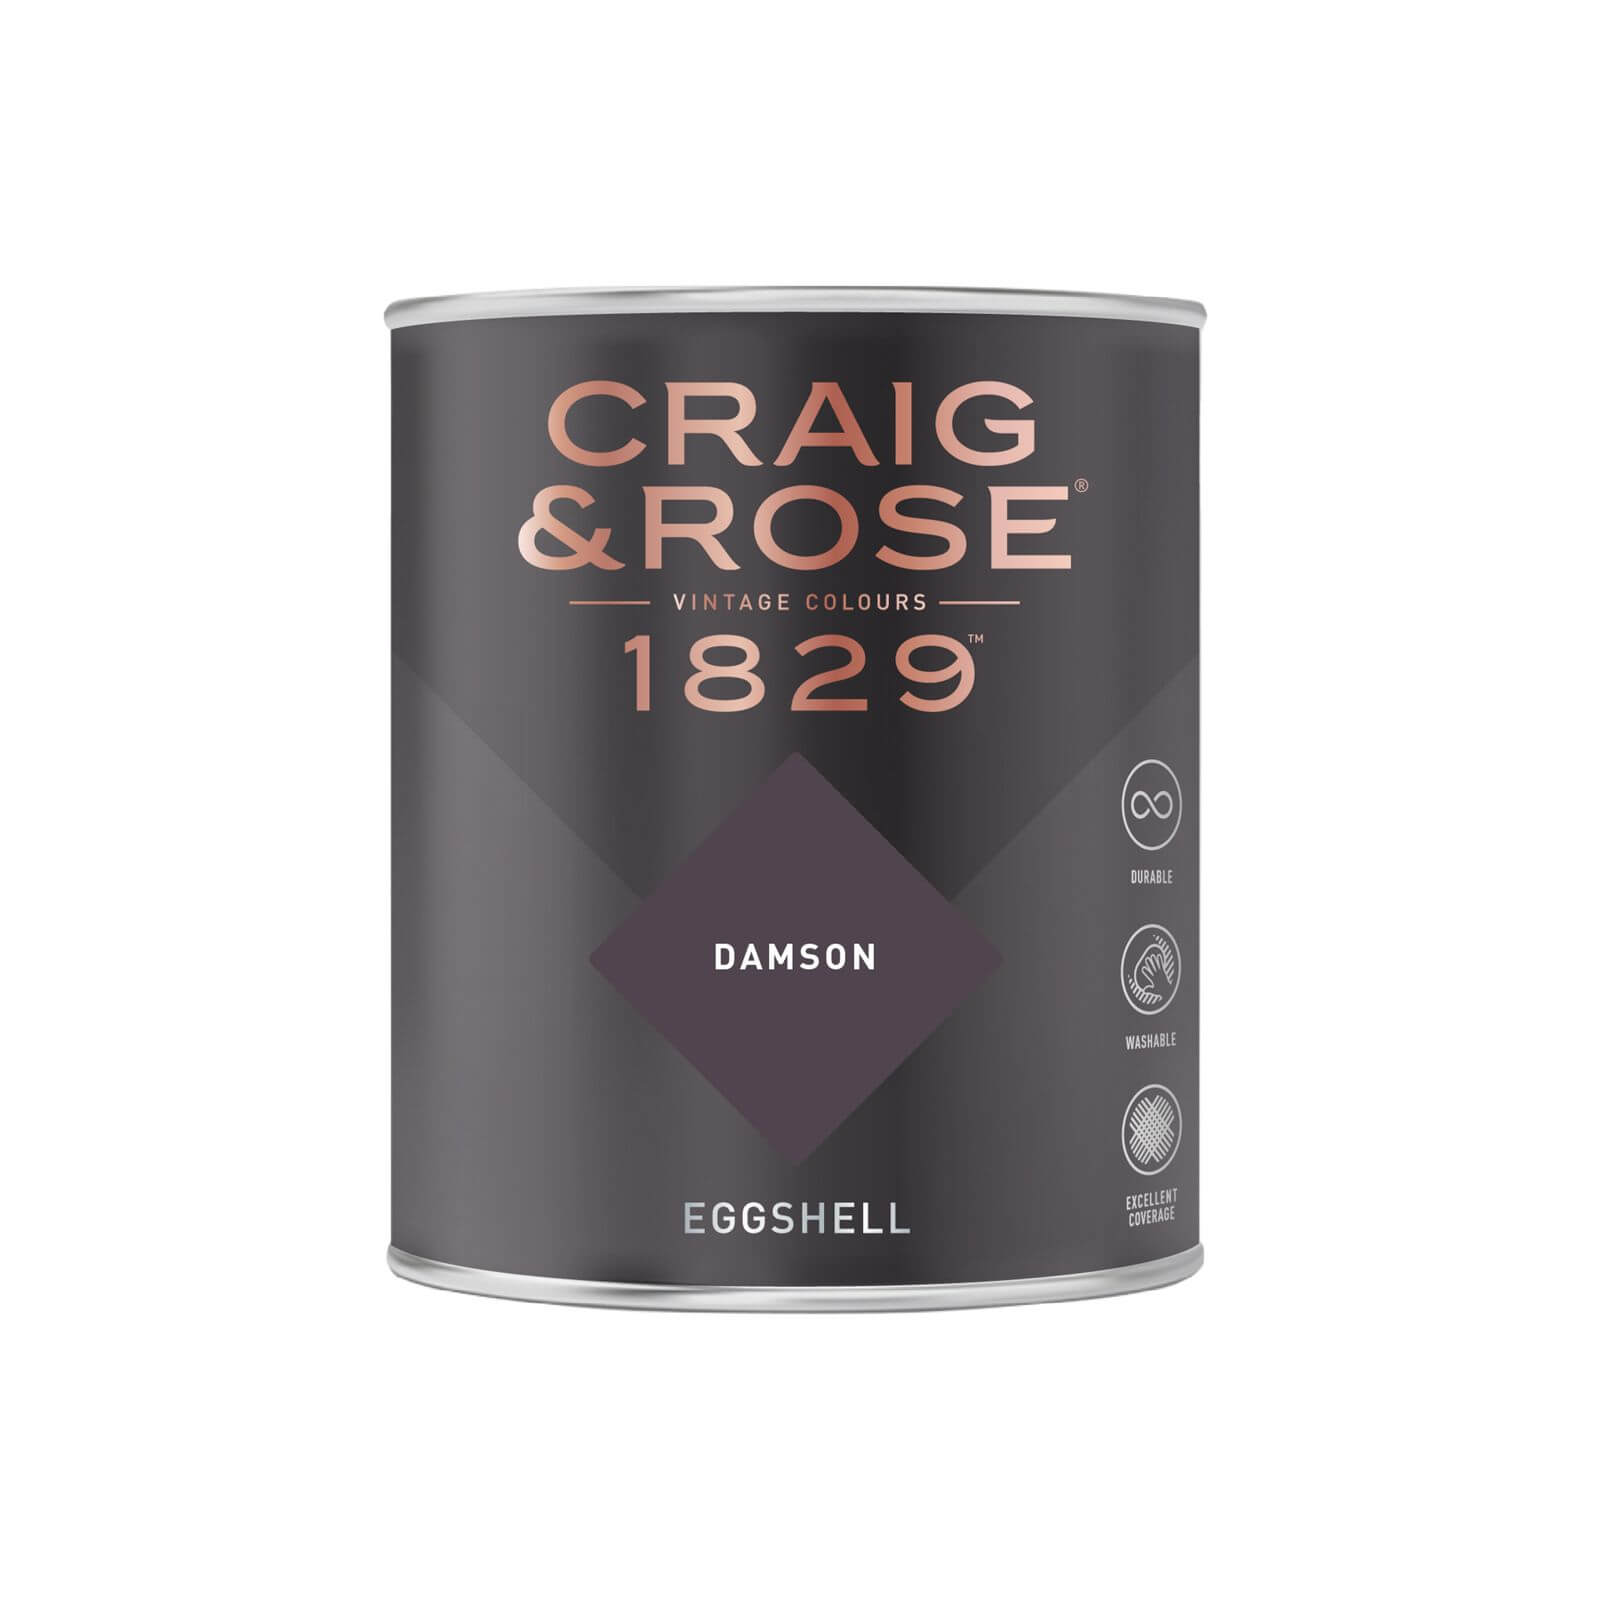 Craig & Rose 1829 Eggshell Paint Damson - 750ml